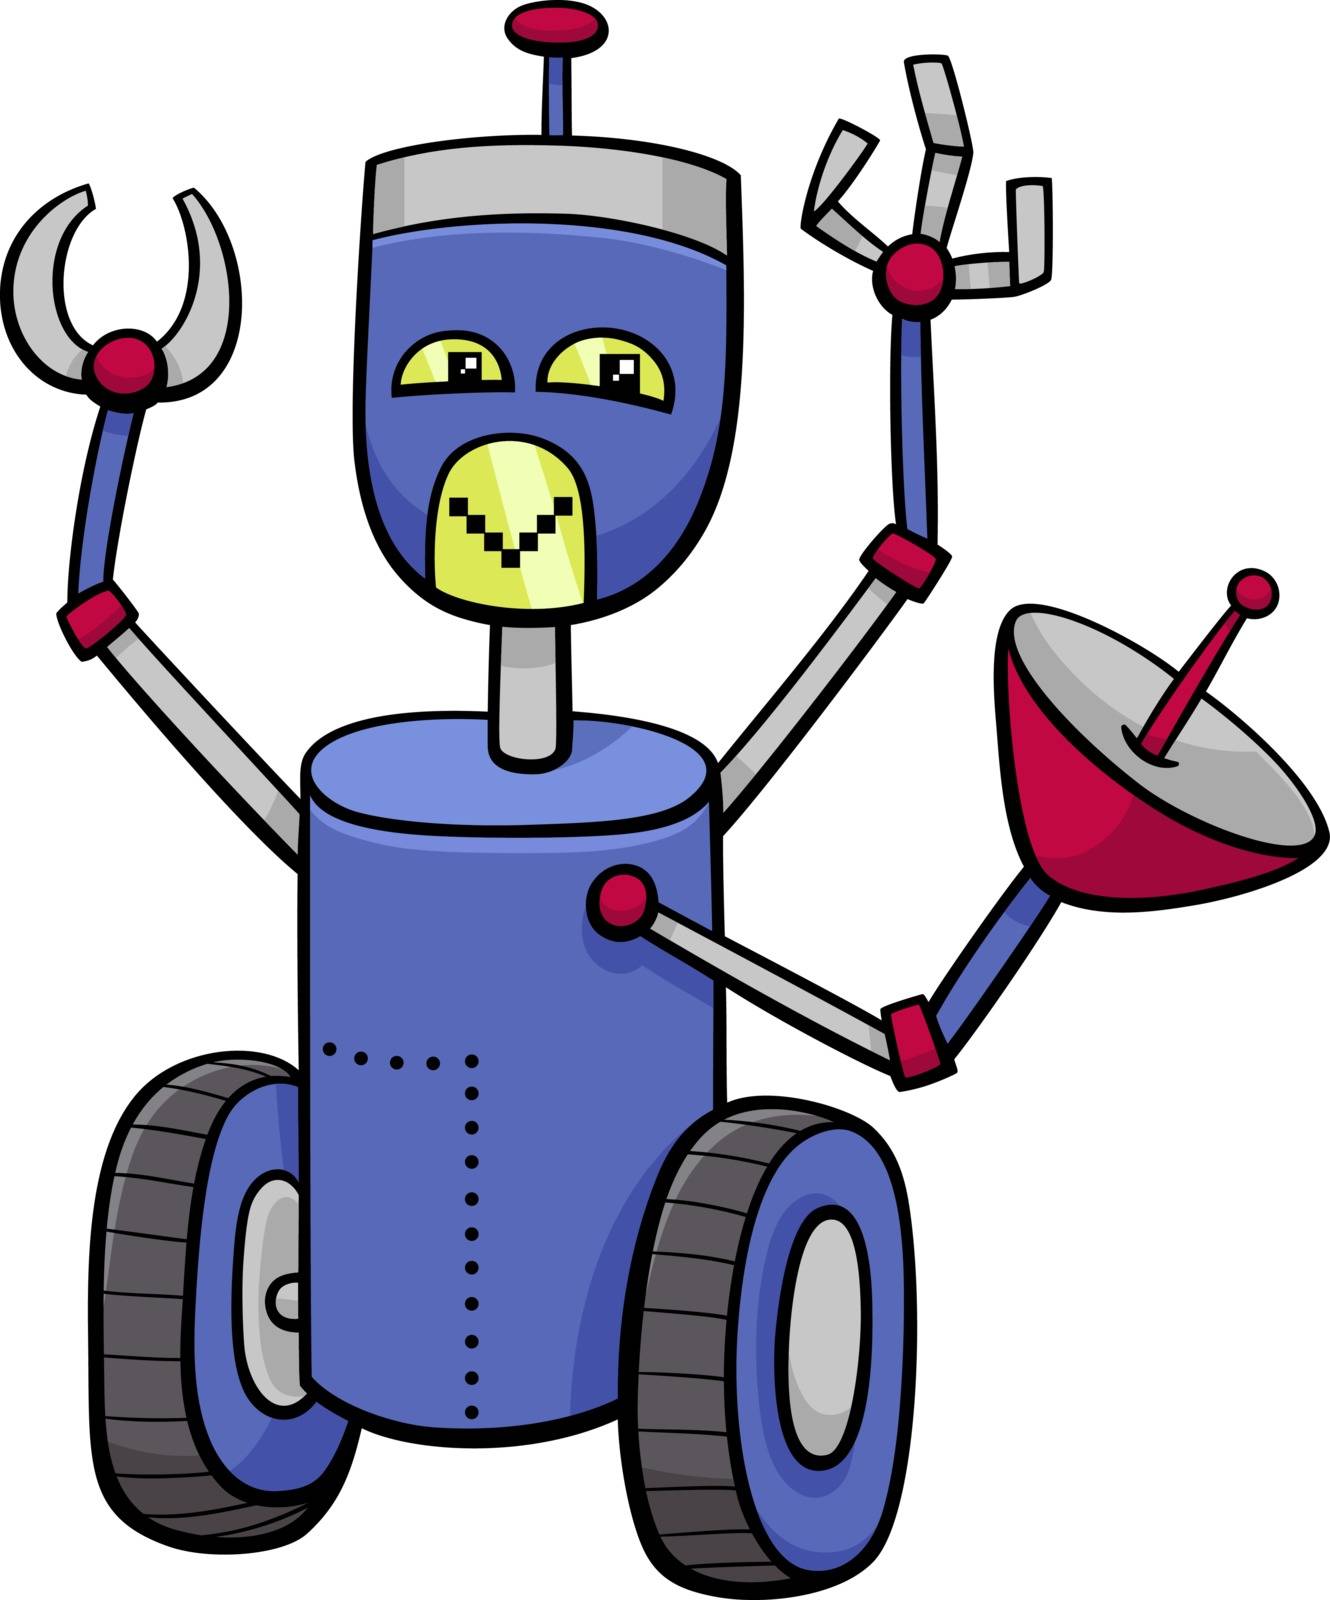 robot cartoon character by izakowski